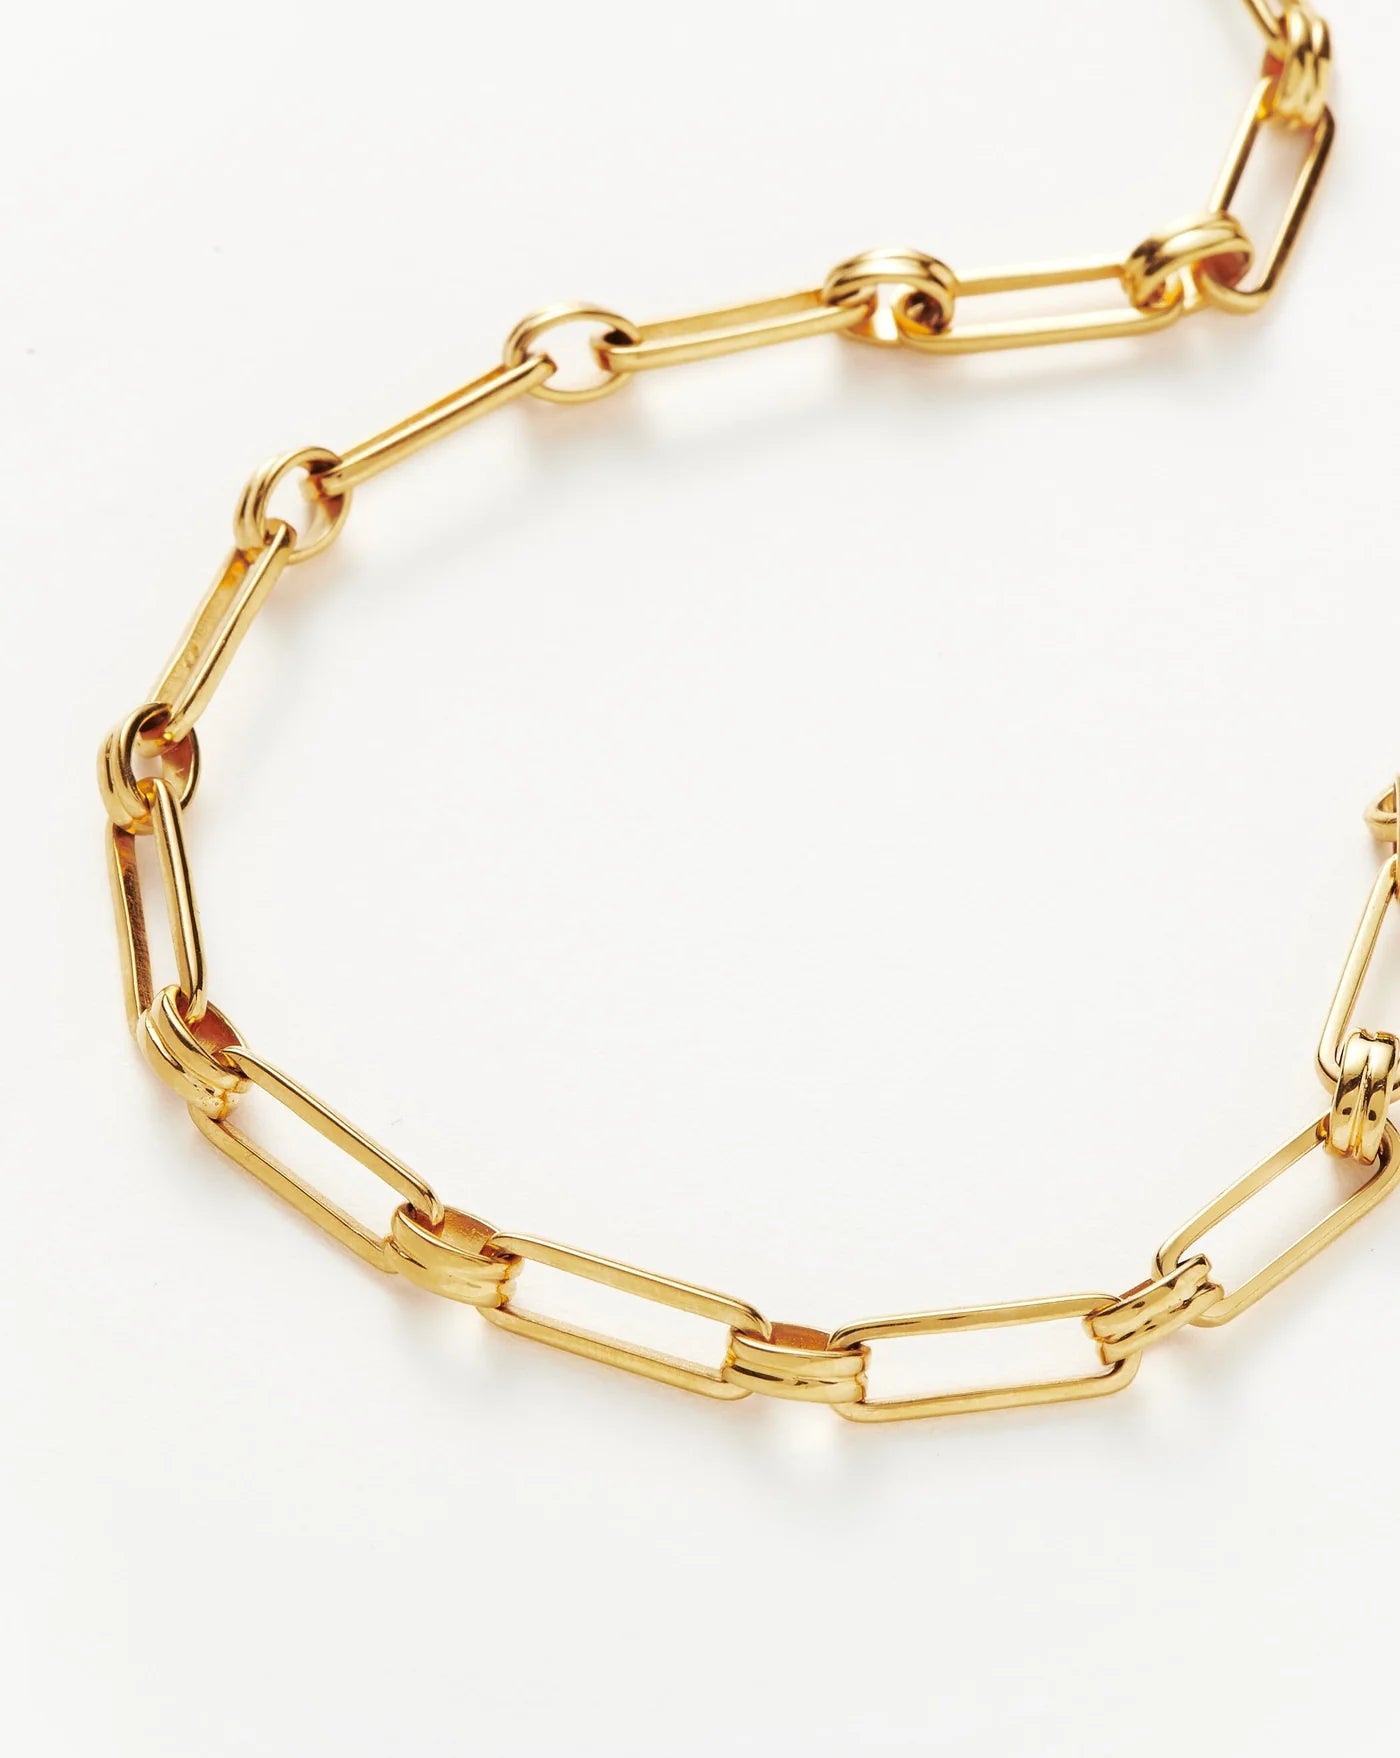 Aegis Chain Necklace